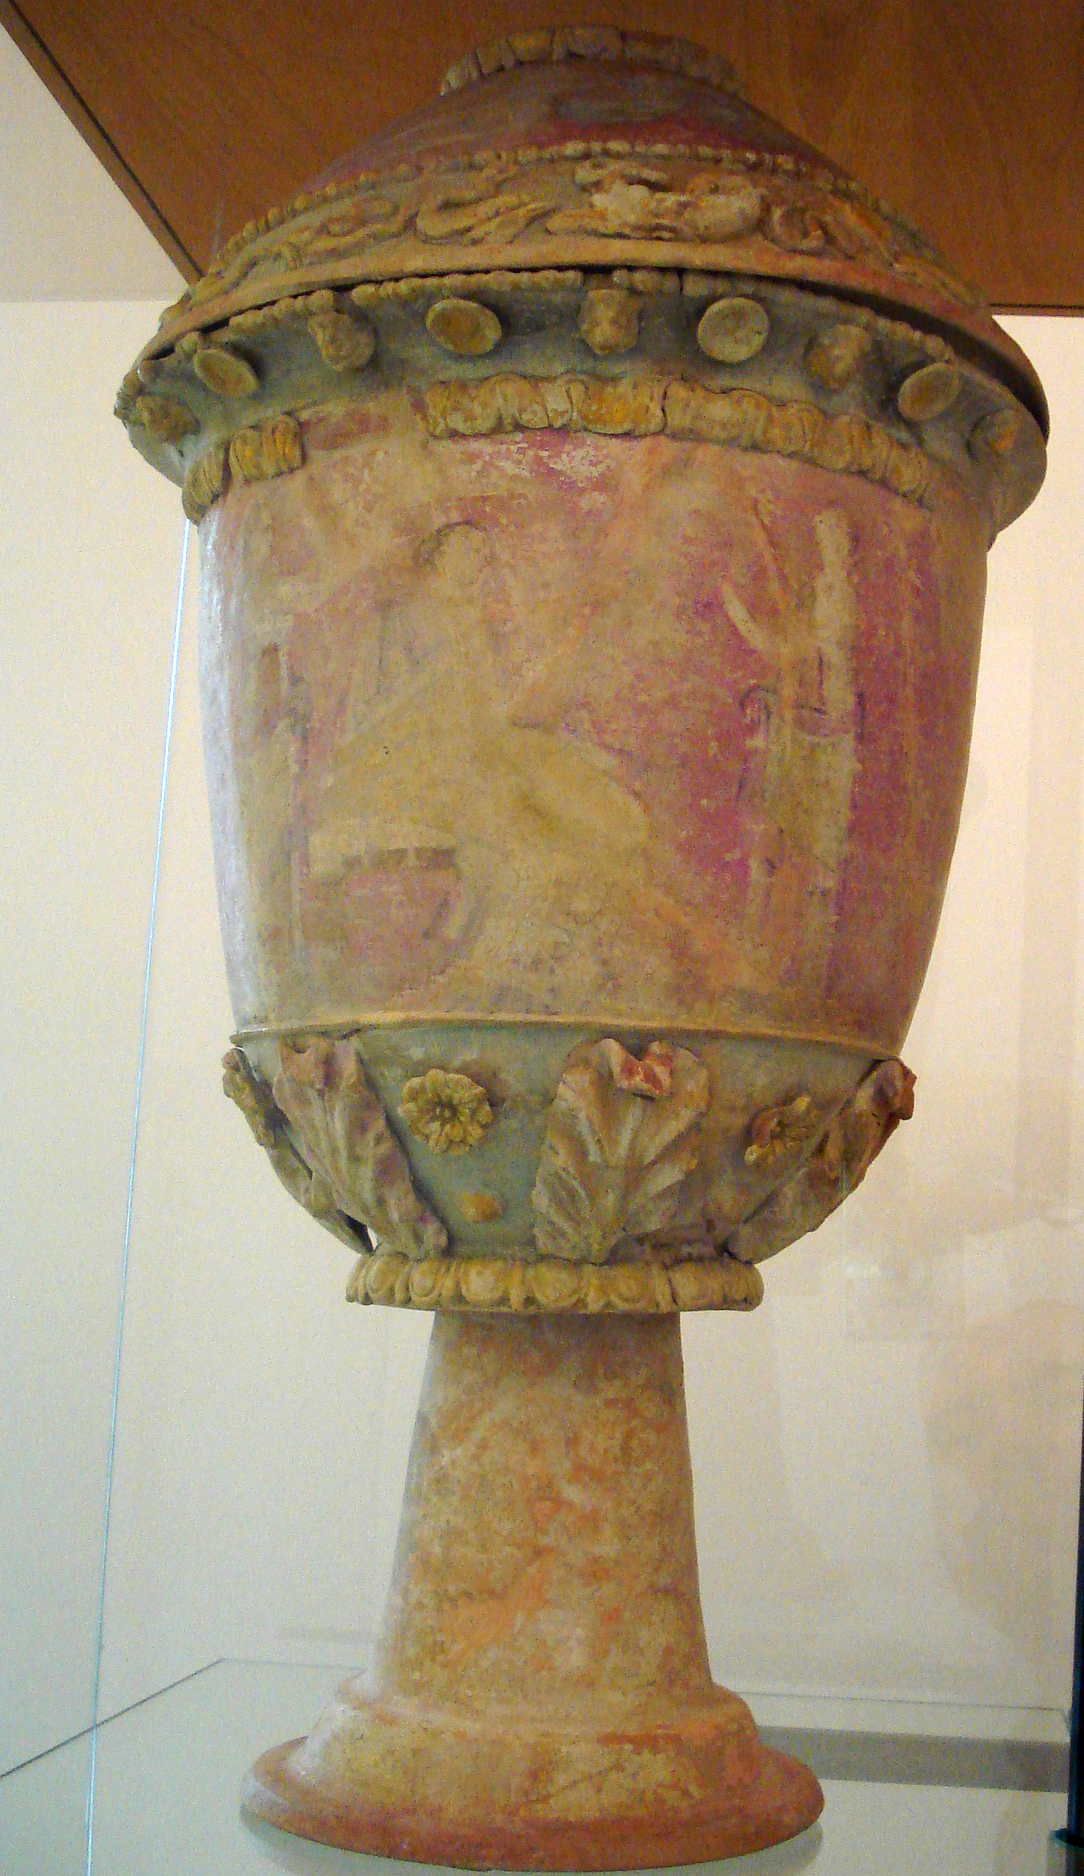 File:Vasi terracotta.jpg - Wikipedia